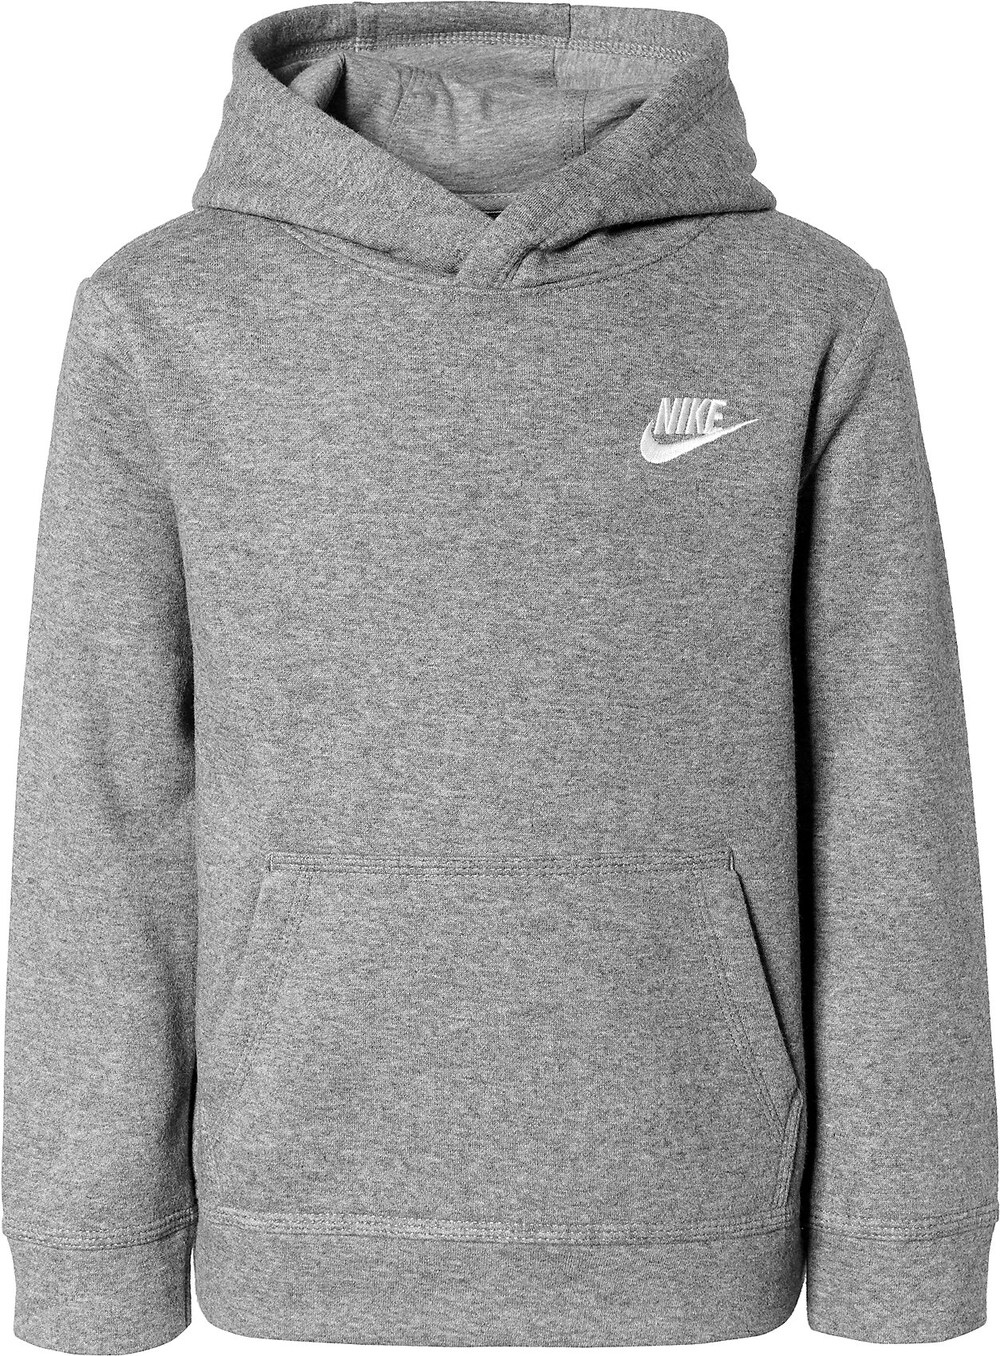 Толстовка Nike Sportswear Club, пестрый серый